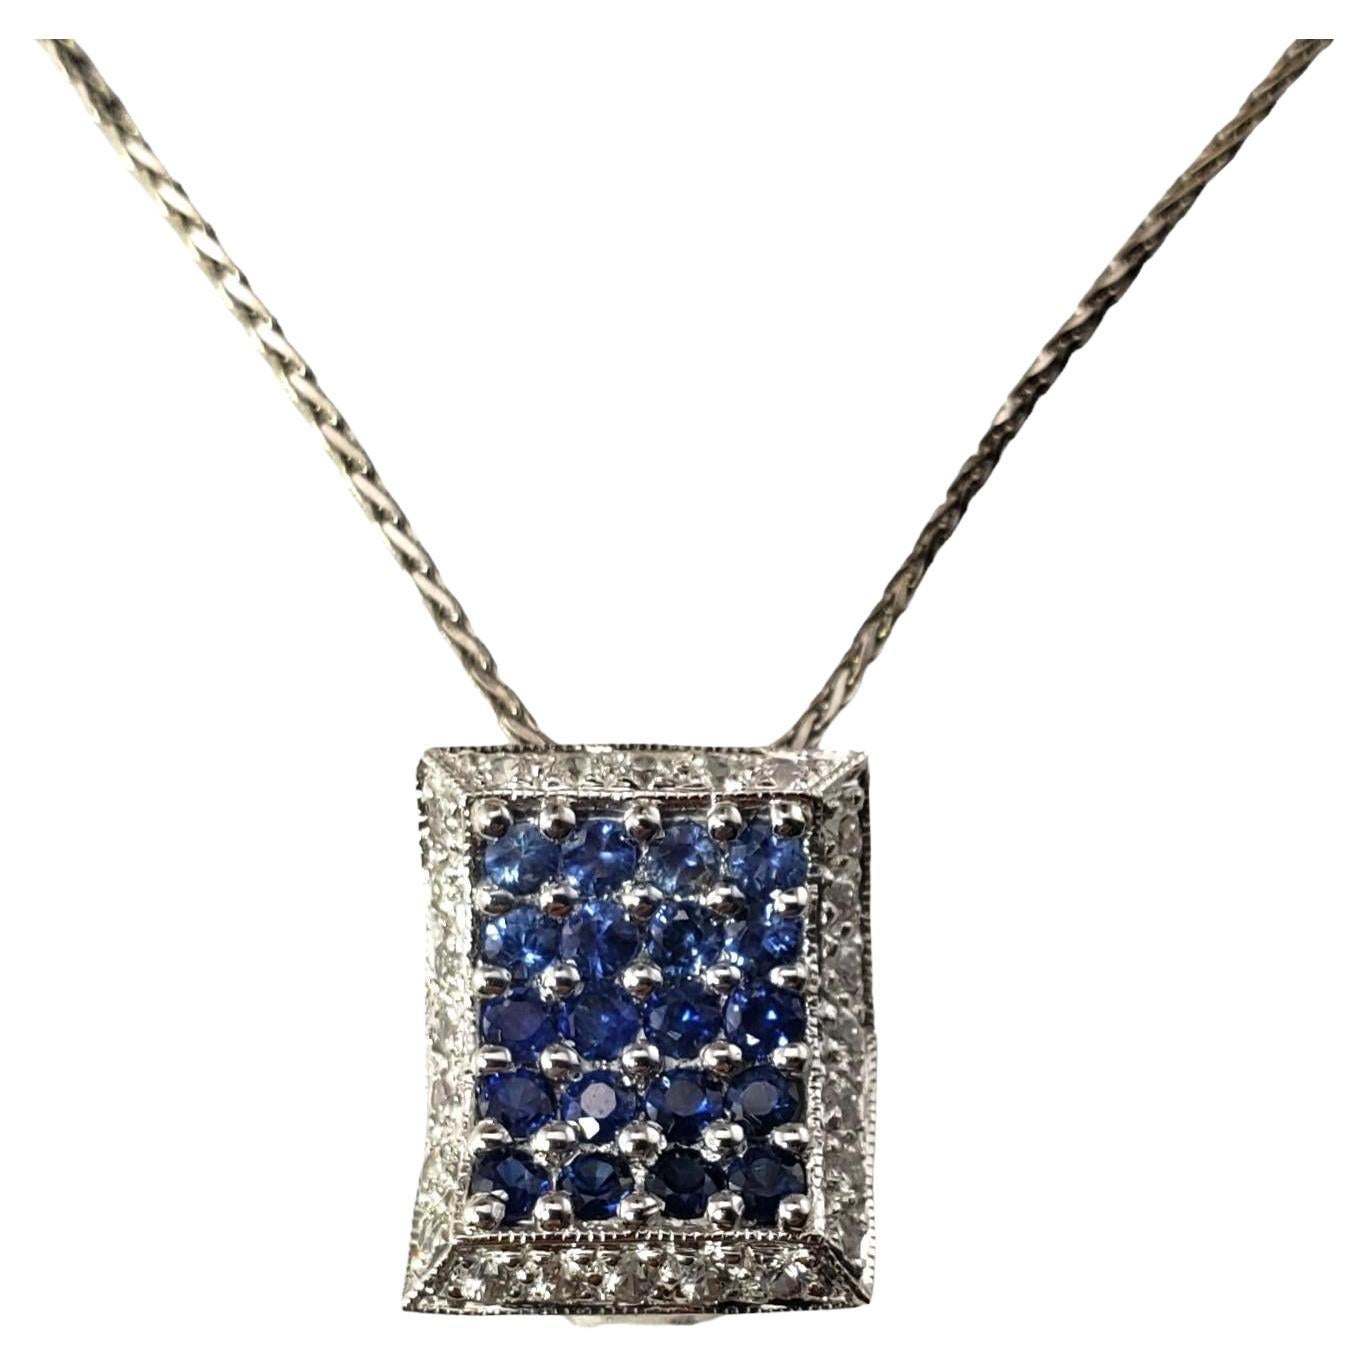  Collier pendentif en saphir bleu et blanc 14 carats WG n° 15573